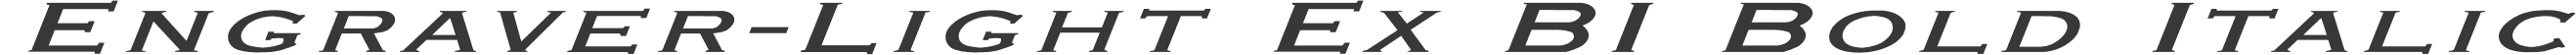 Engraver-Light Ex BI Bold Italic